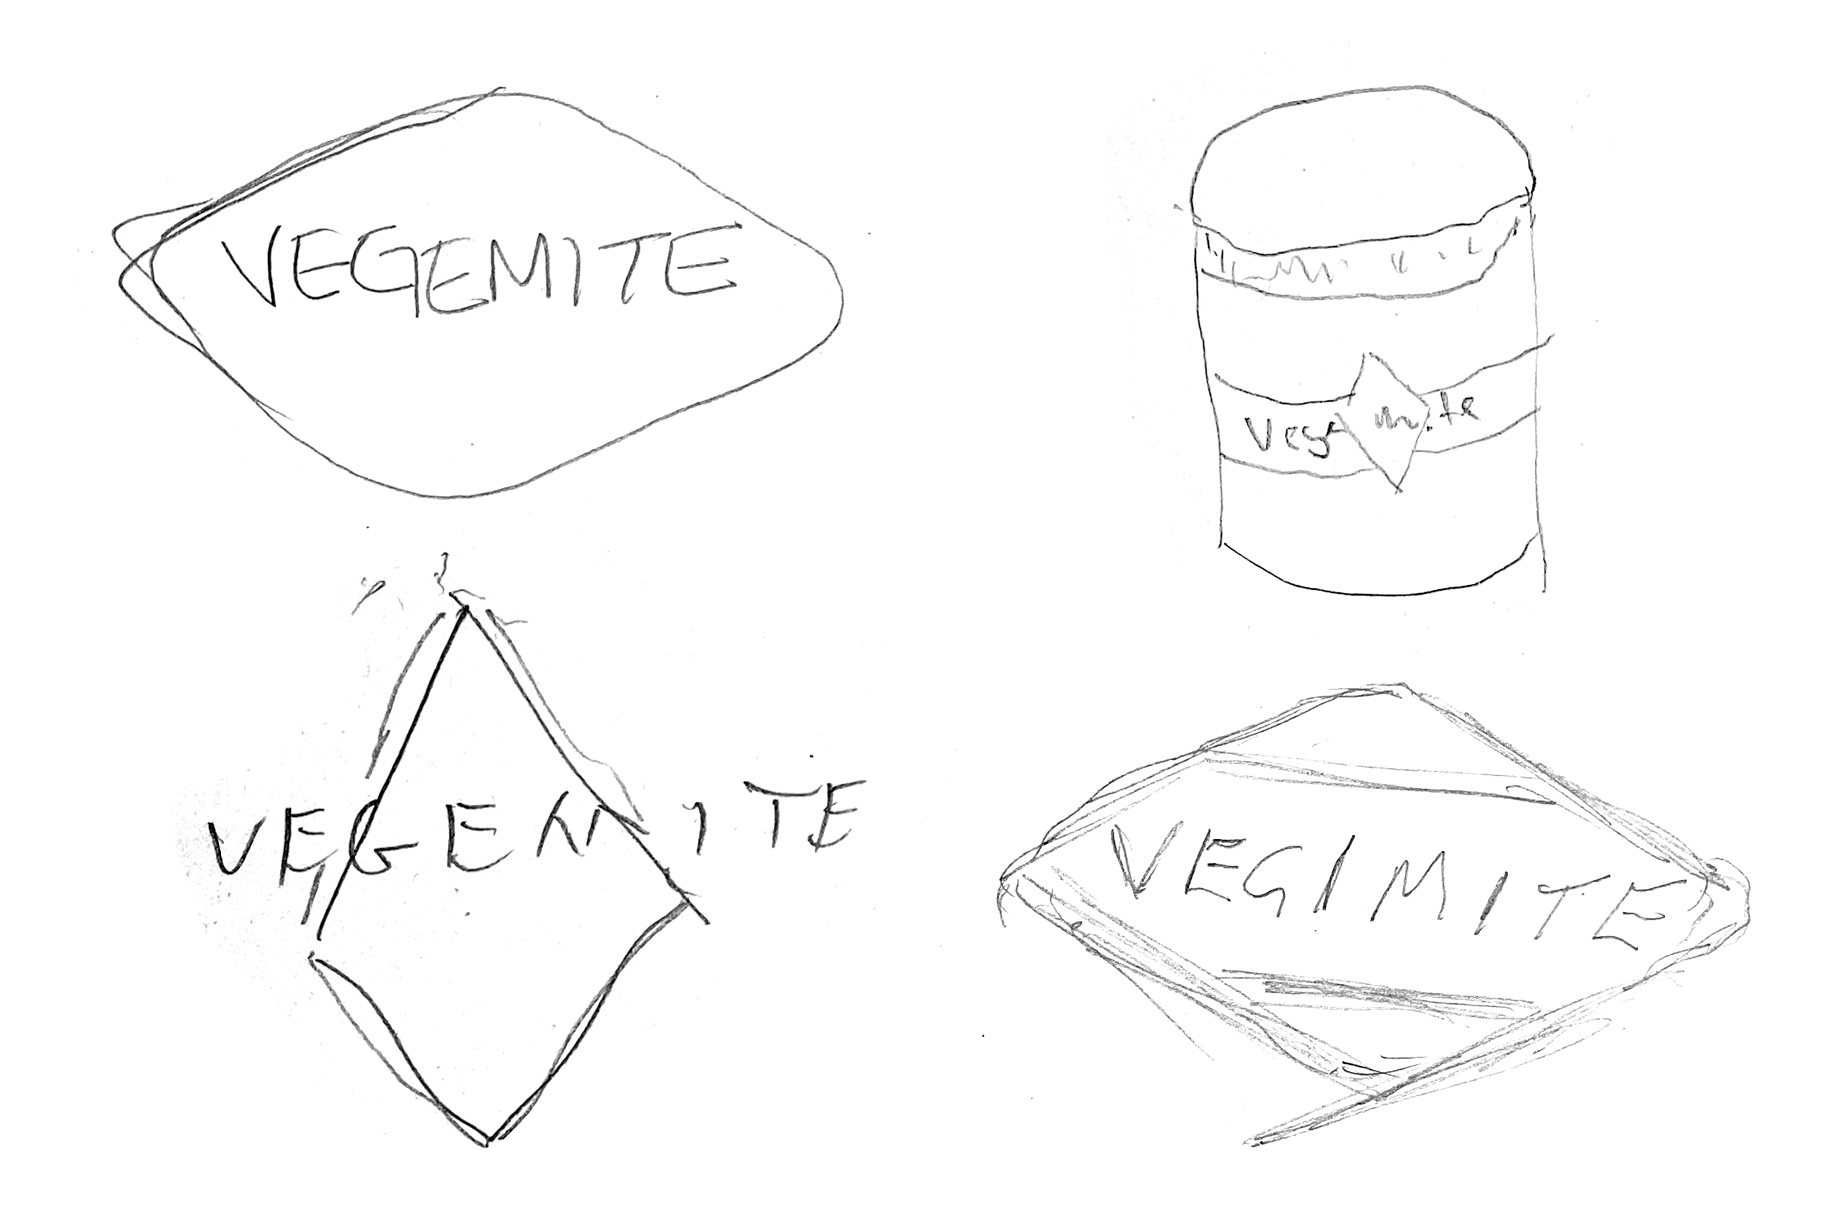 4 pencil sketches of the Vegemite logo